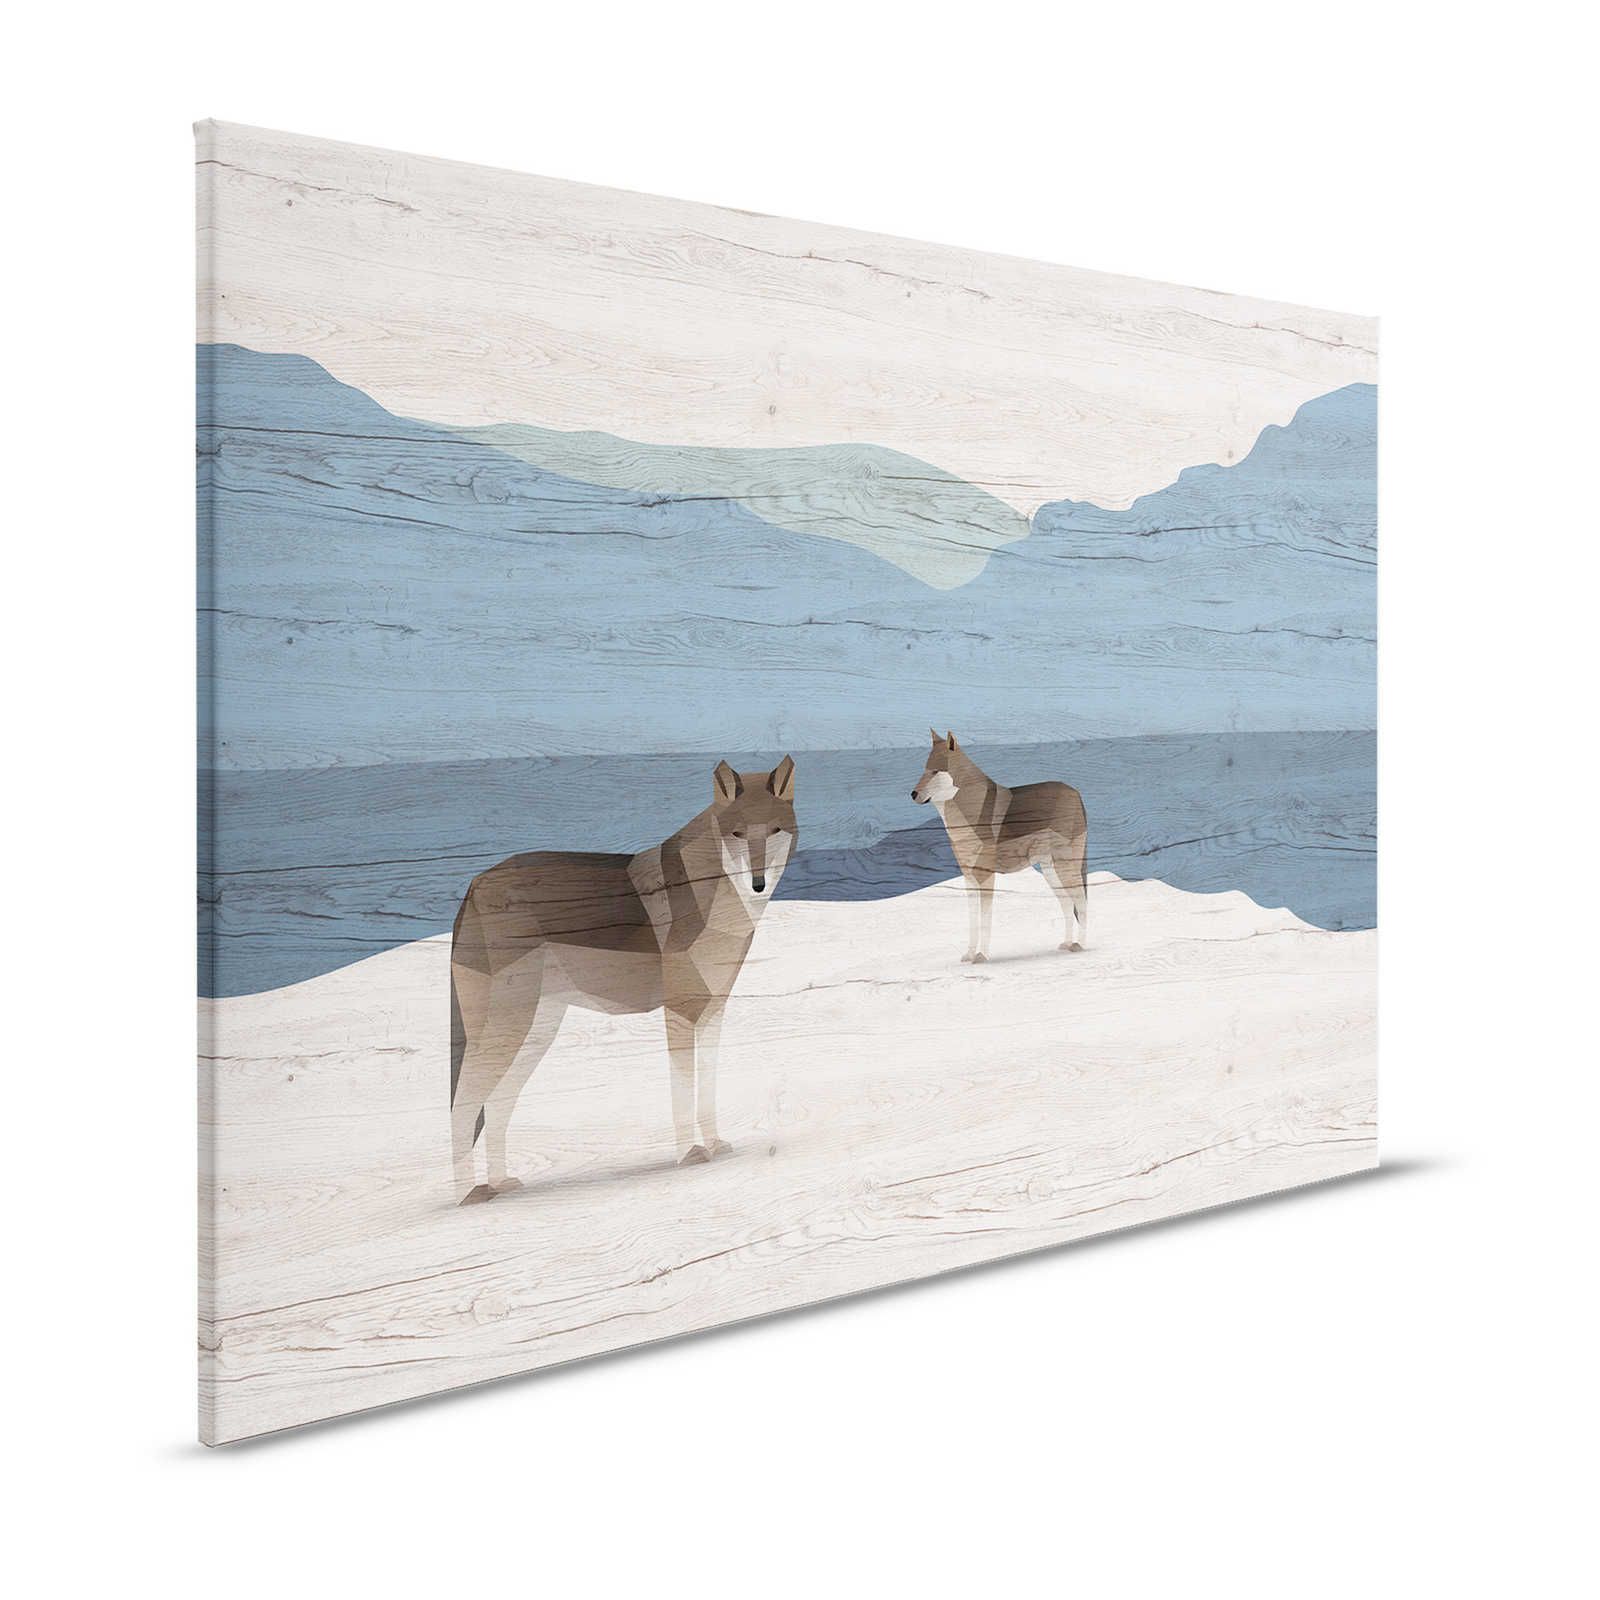         Yukon 1 - Leinwandbild Berge & Hunde mit Holzstruktur – 1,20 m x 0,80 m
    